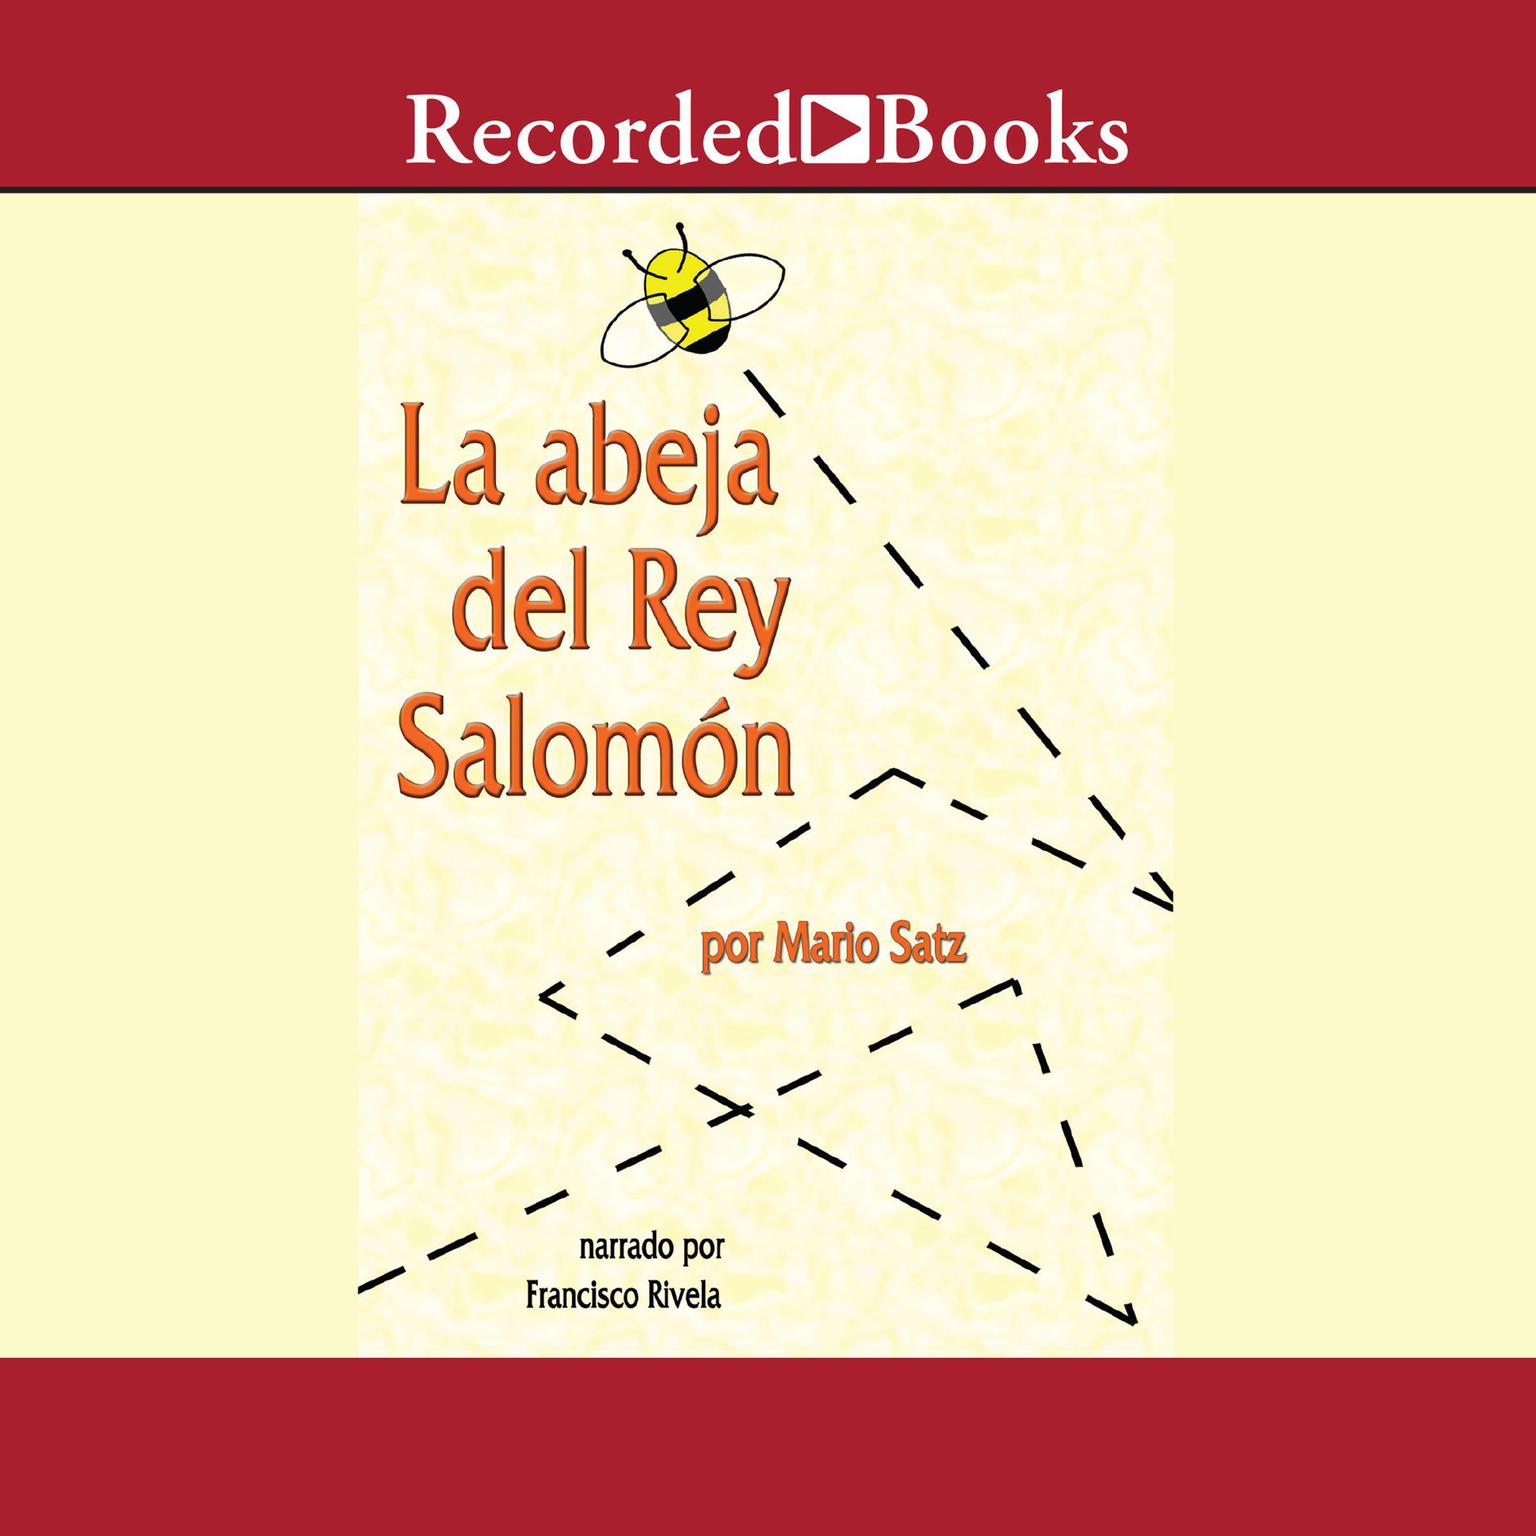 La abeja del rey salomon (The Bee of King Salomon) Audiobook, by Mario Satz